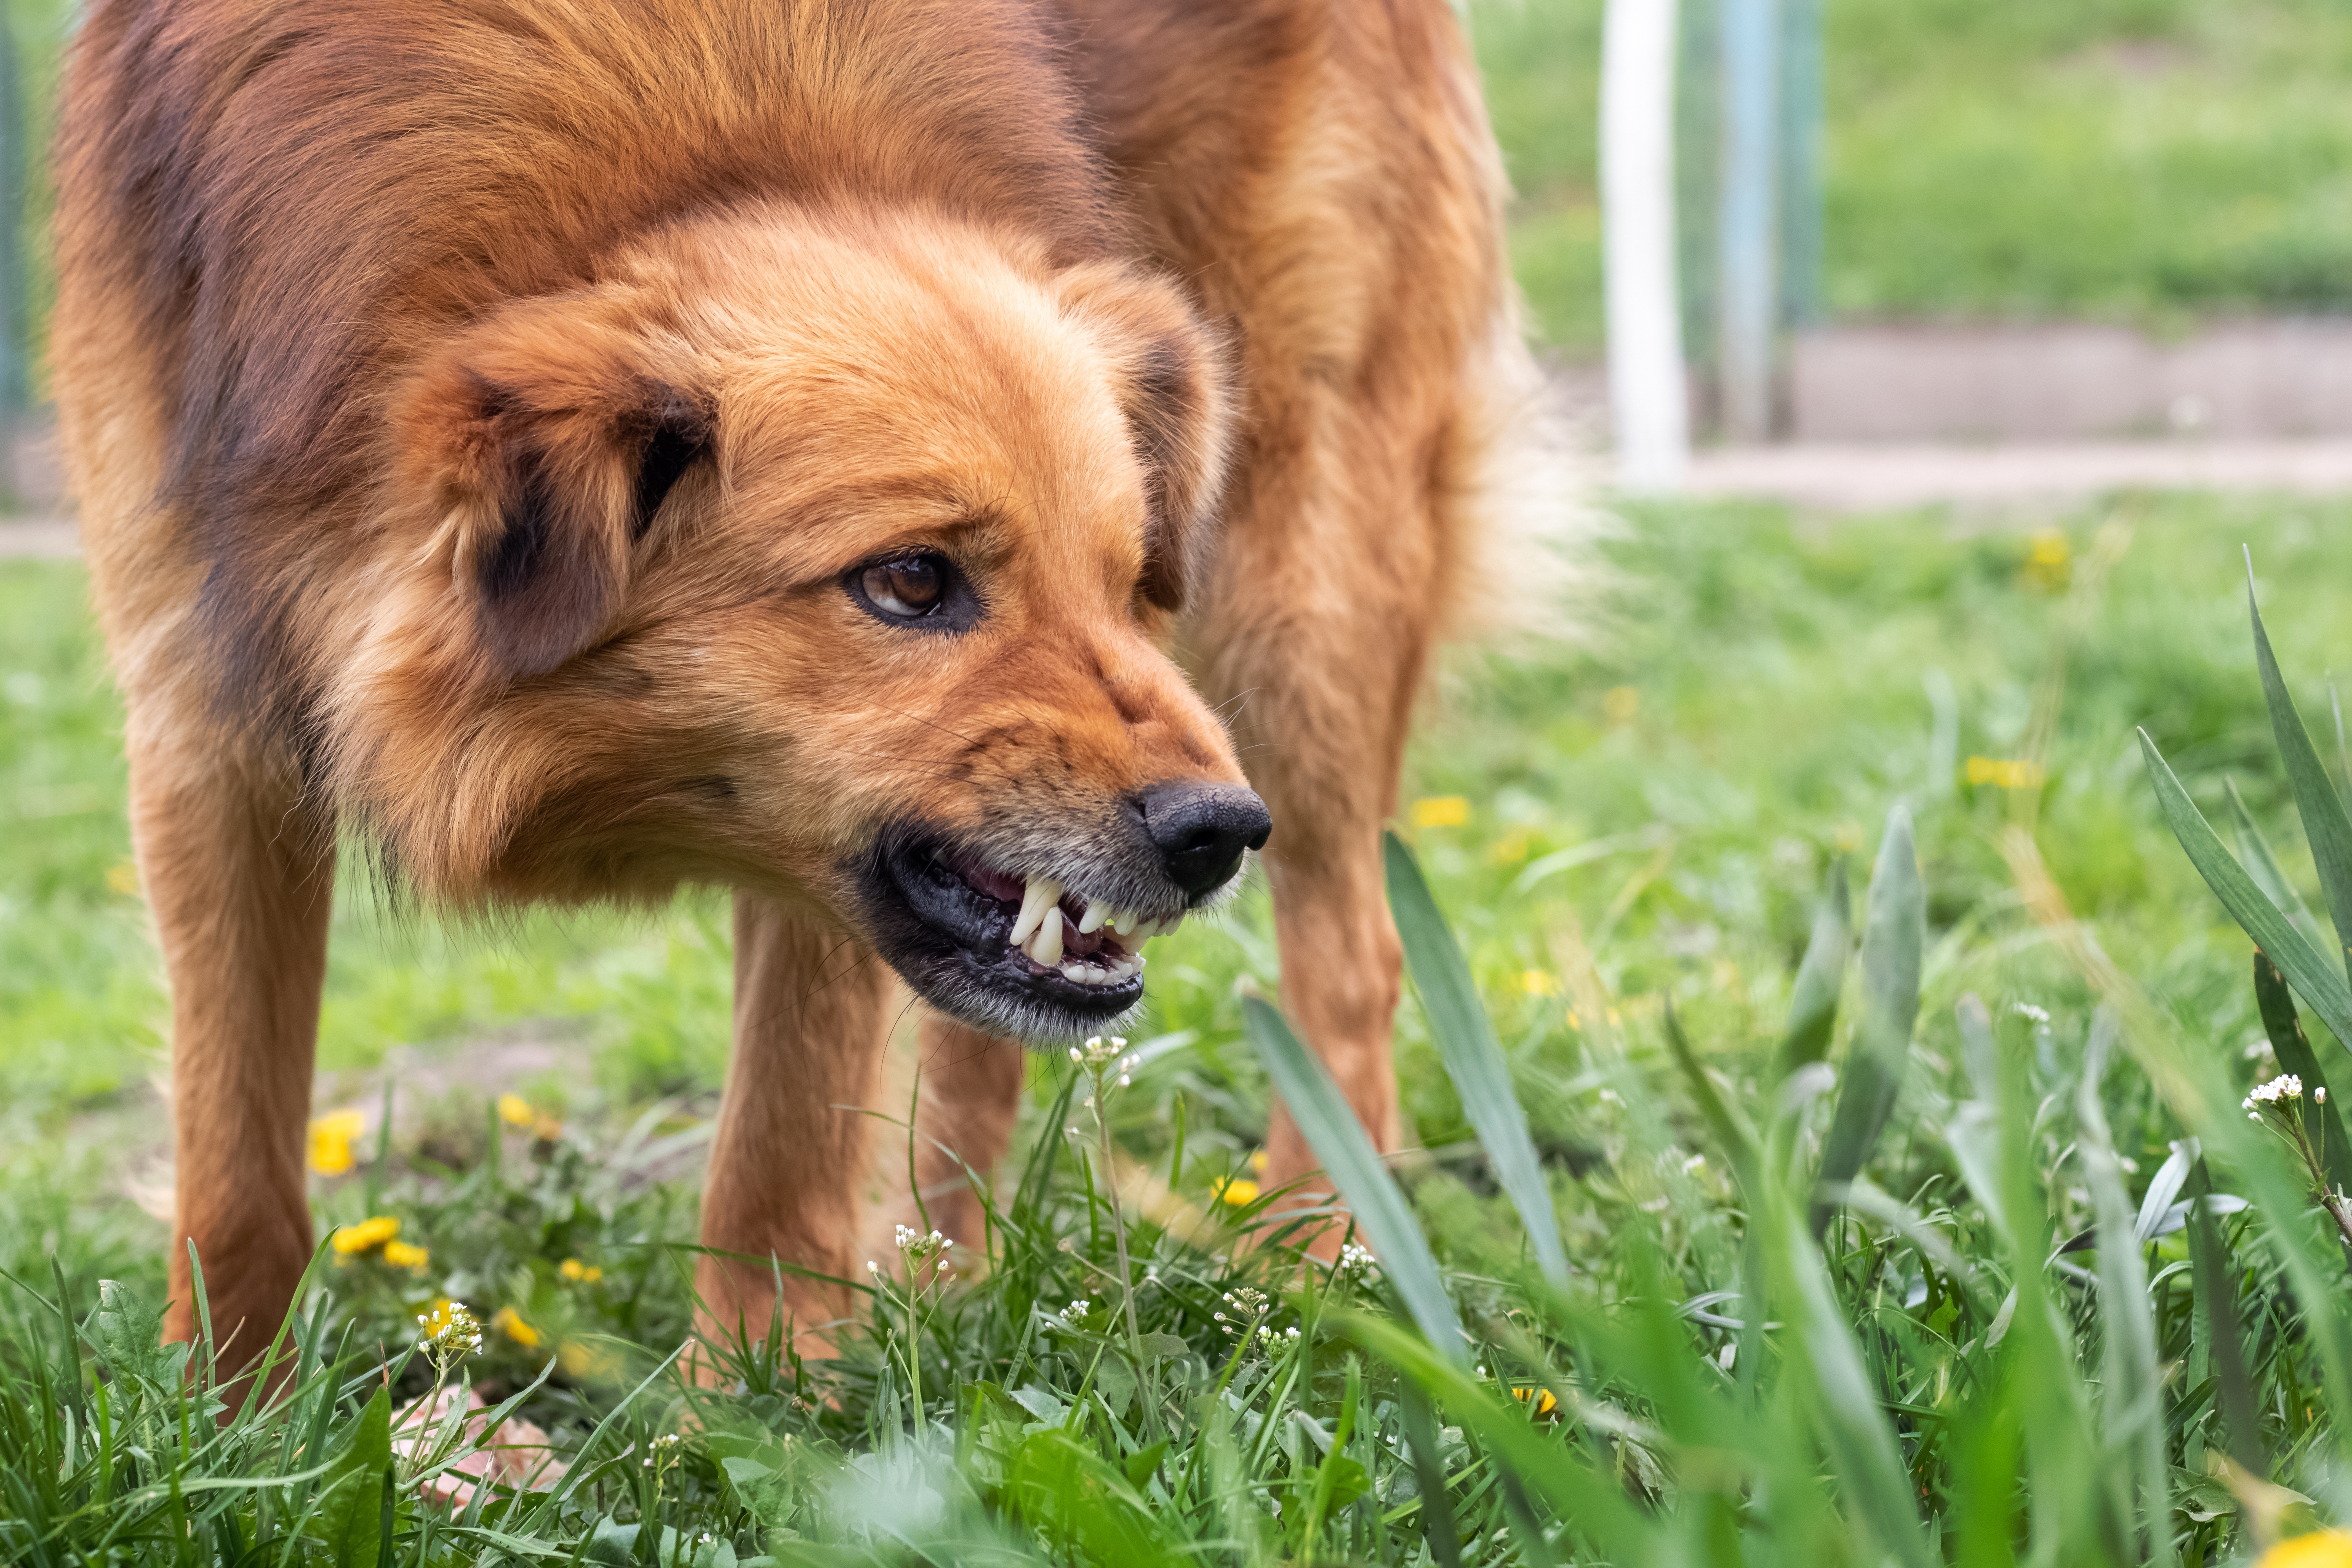 Aggressive dog barks | Source: Shutterstock